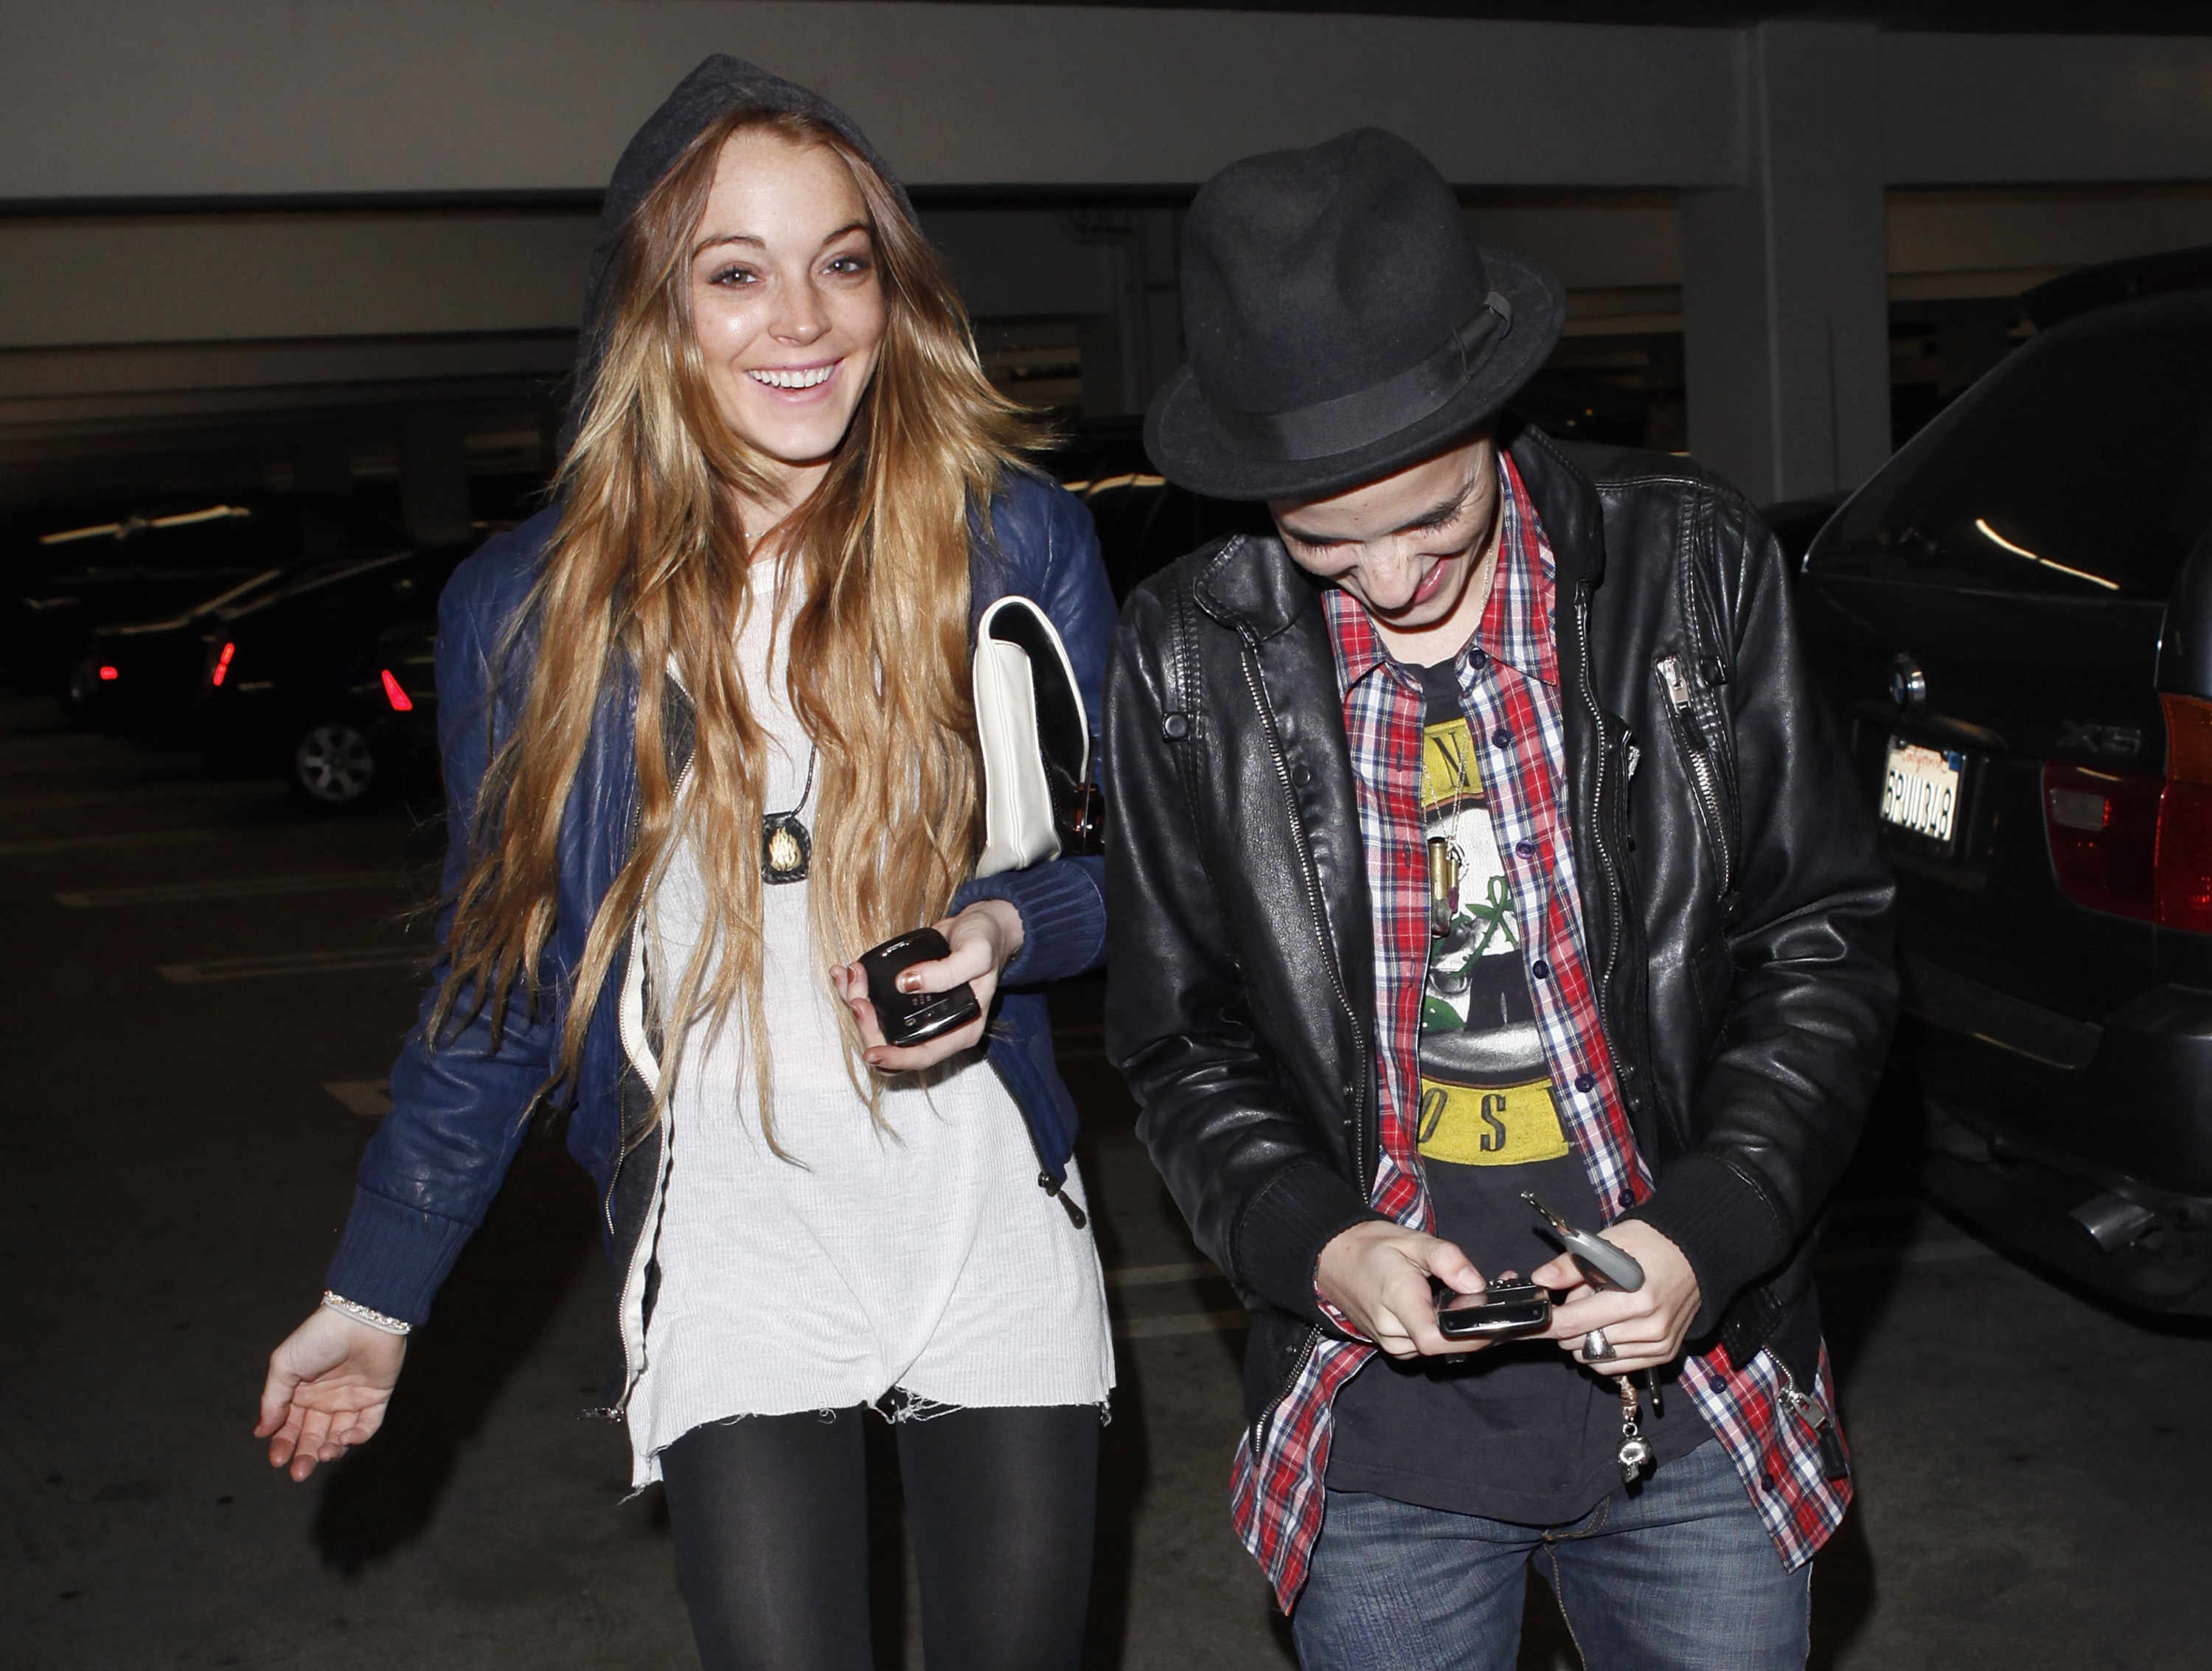 Lindsay Lohan and Samantha Ronson walking and laughing together